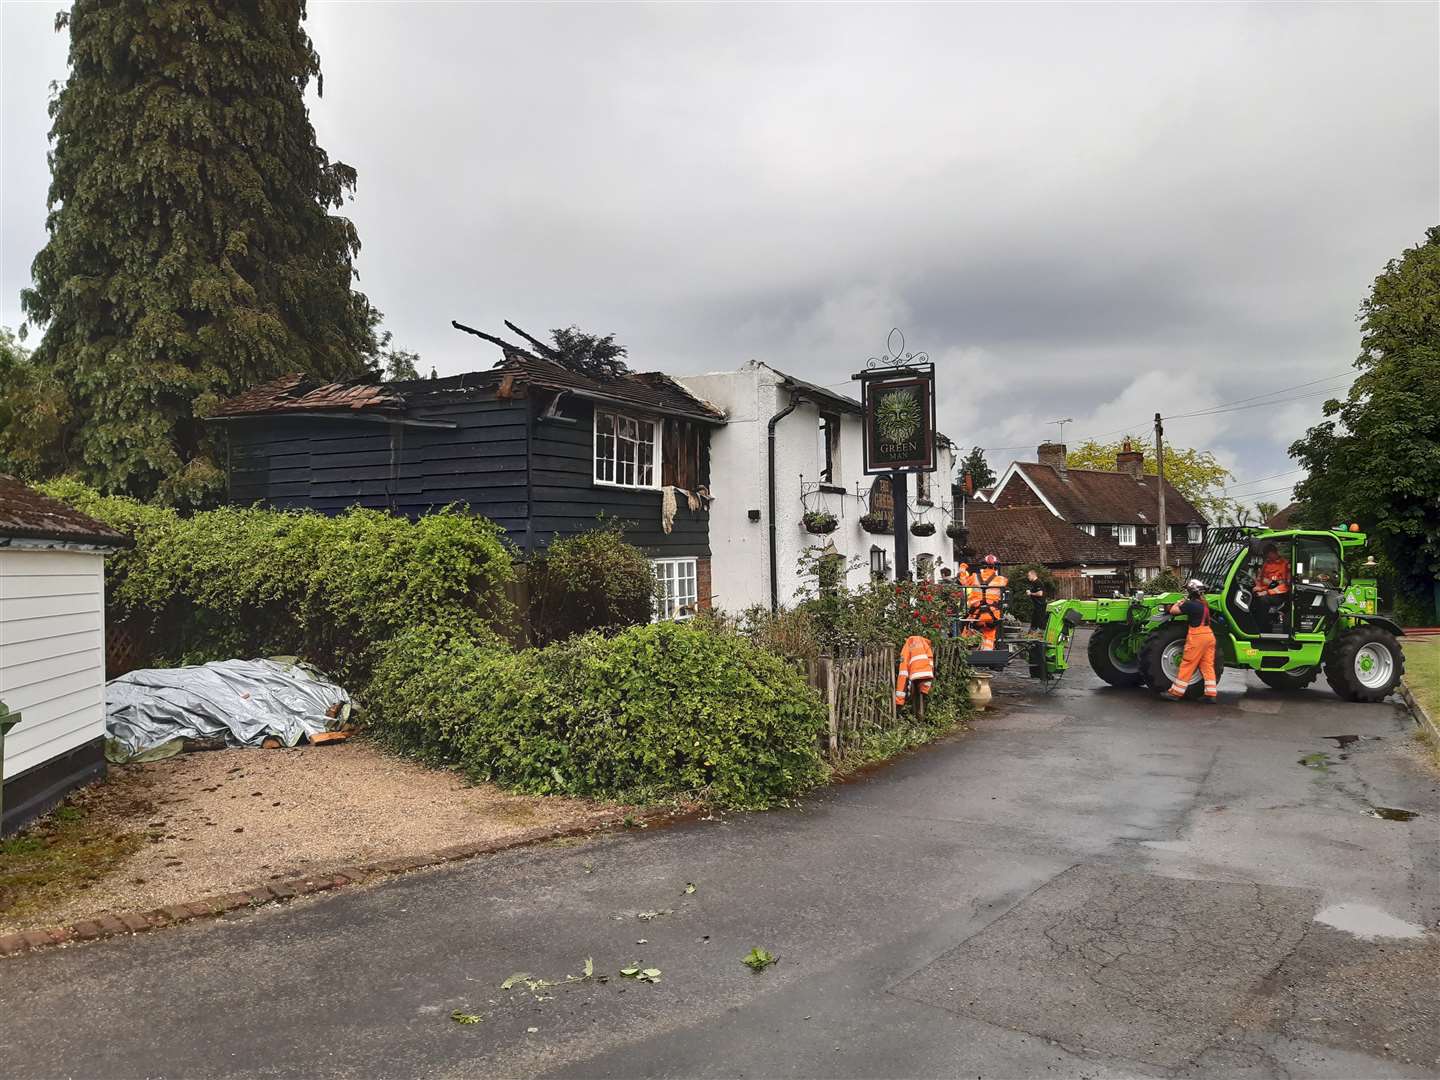 A fire destroyed the Green Man pub in Hodsoll Street near New Ash Green and Vigo Village